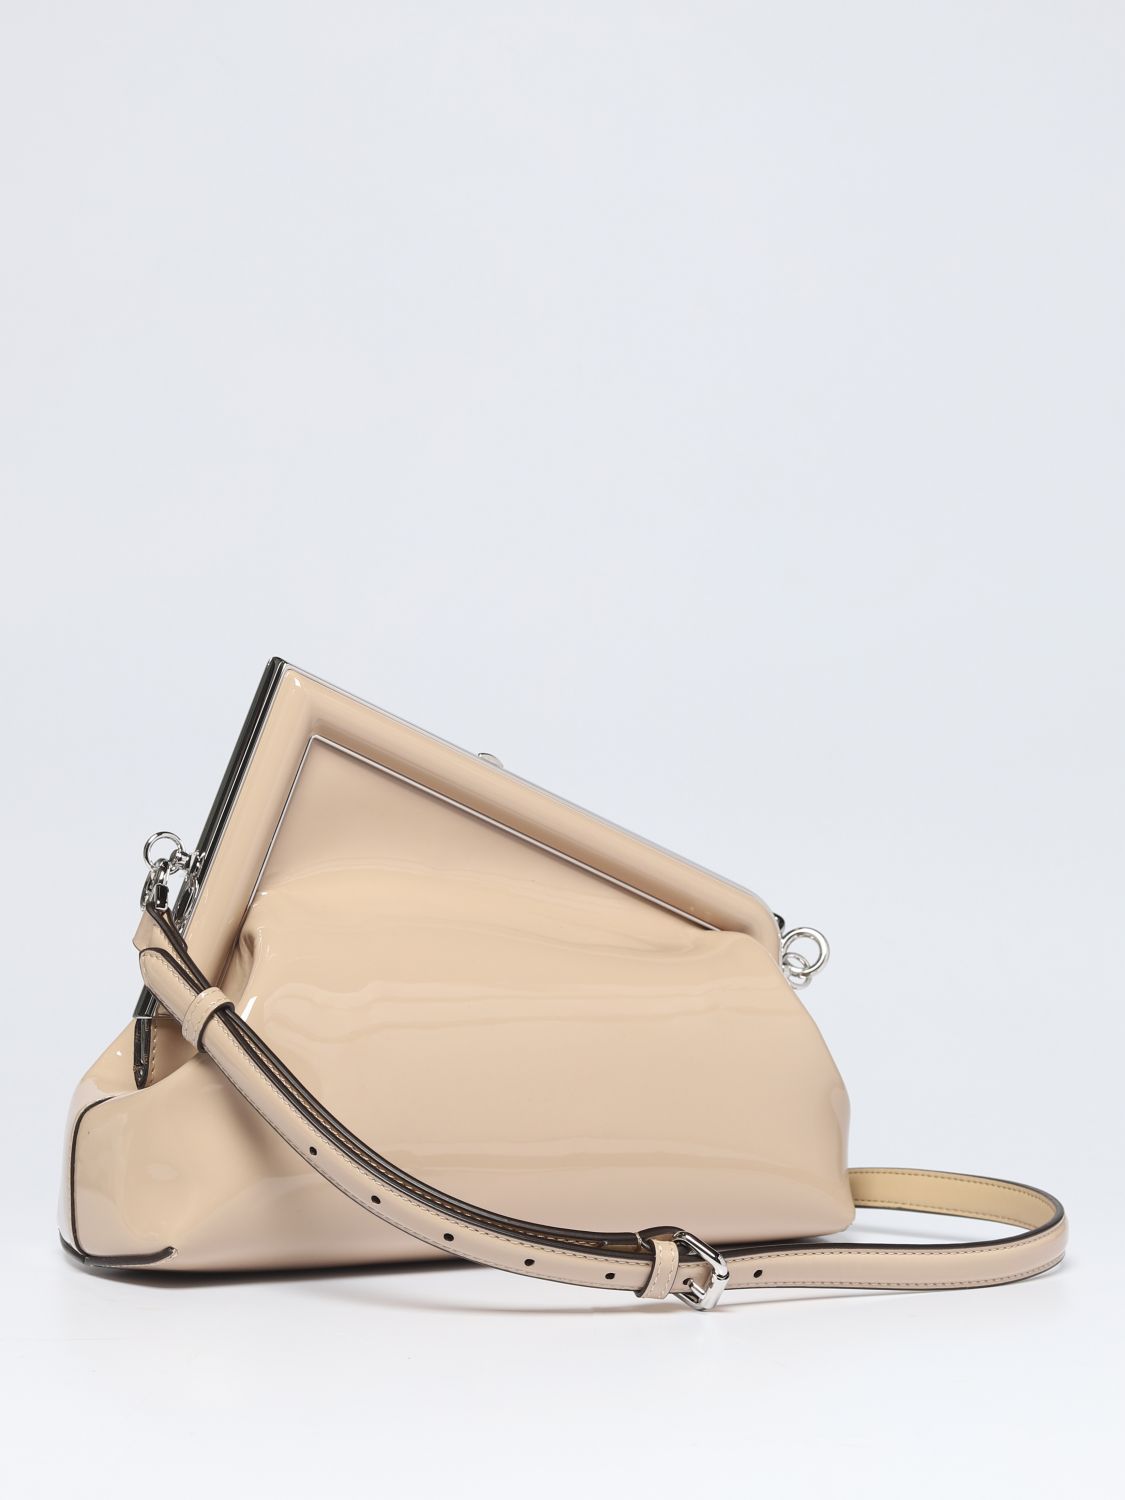 FENDI: First clutch in nappa leather - Fuchsia  Fendi handbag 8BP137ABVE  online at